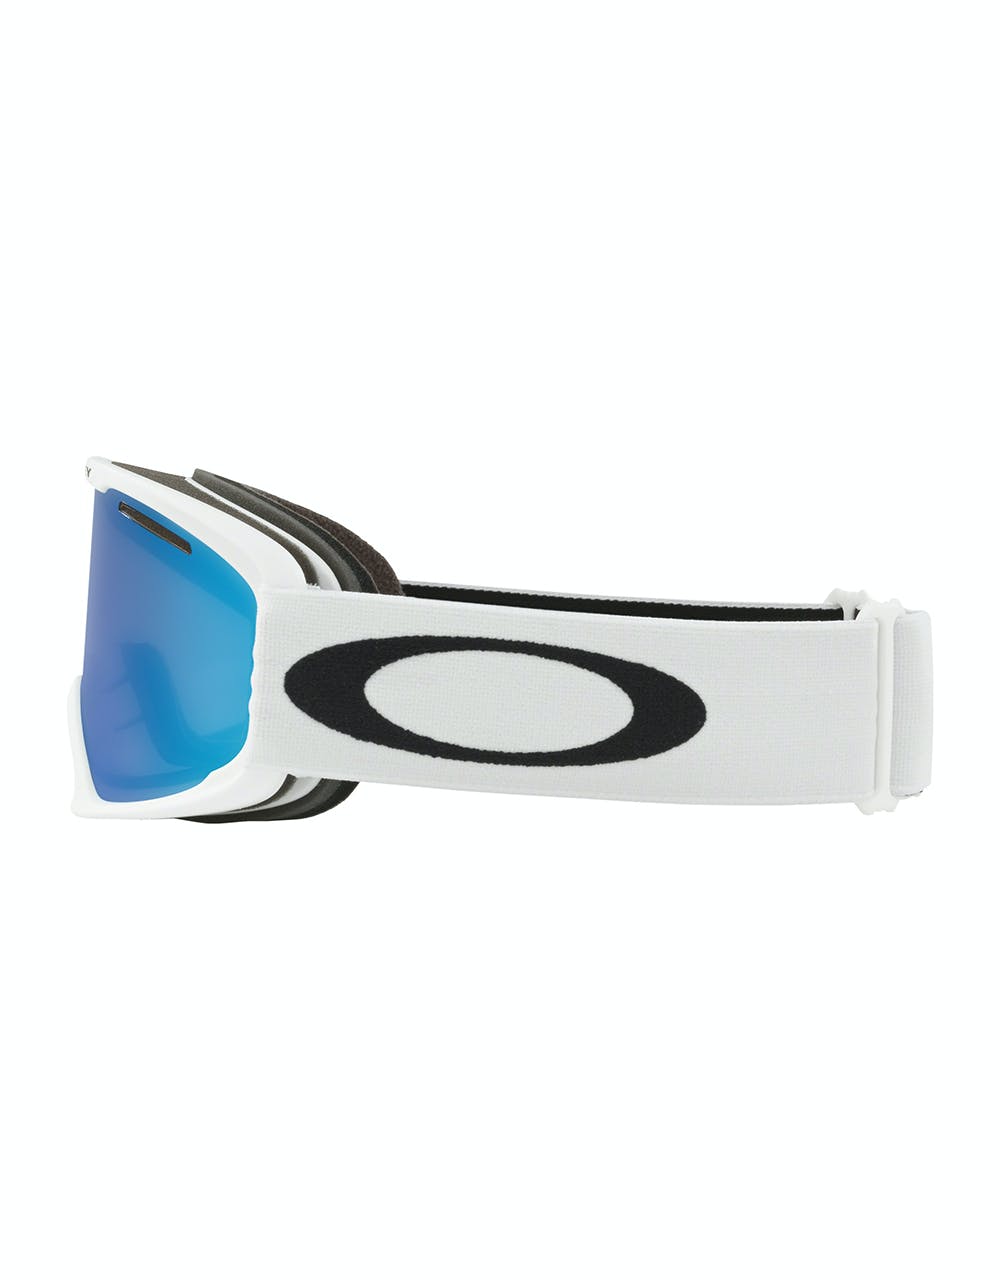 Oakley O Frame 2.0 Pro XL Snowboard Goggles - White/Violet Iridium